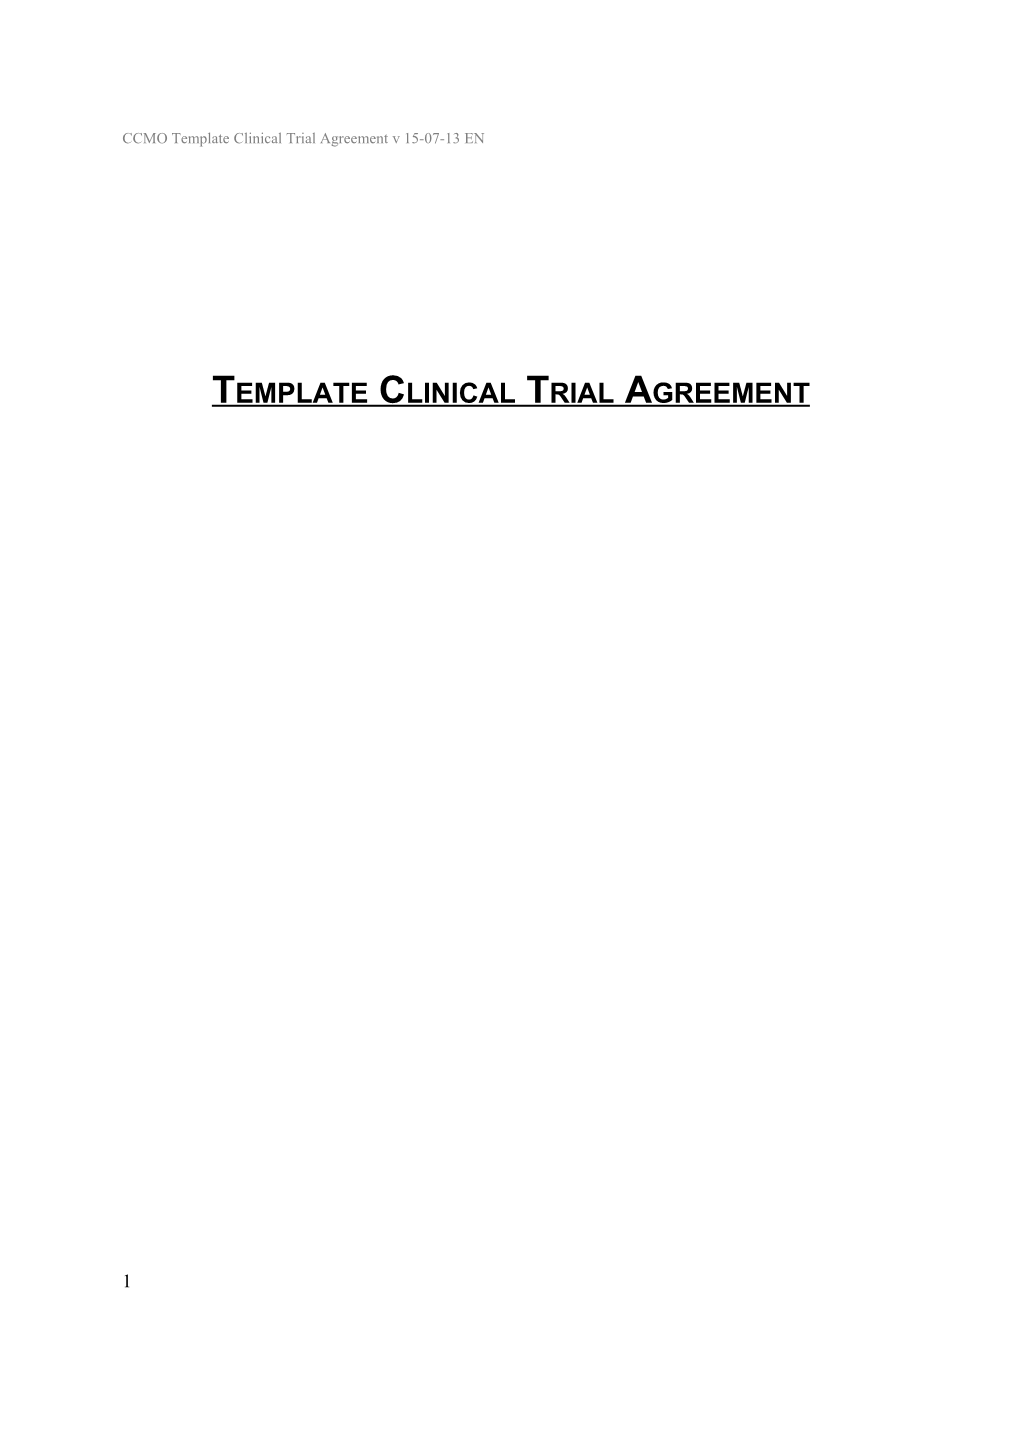 Onderzoeksovereenkomst / Clinical Study Agreement